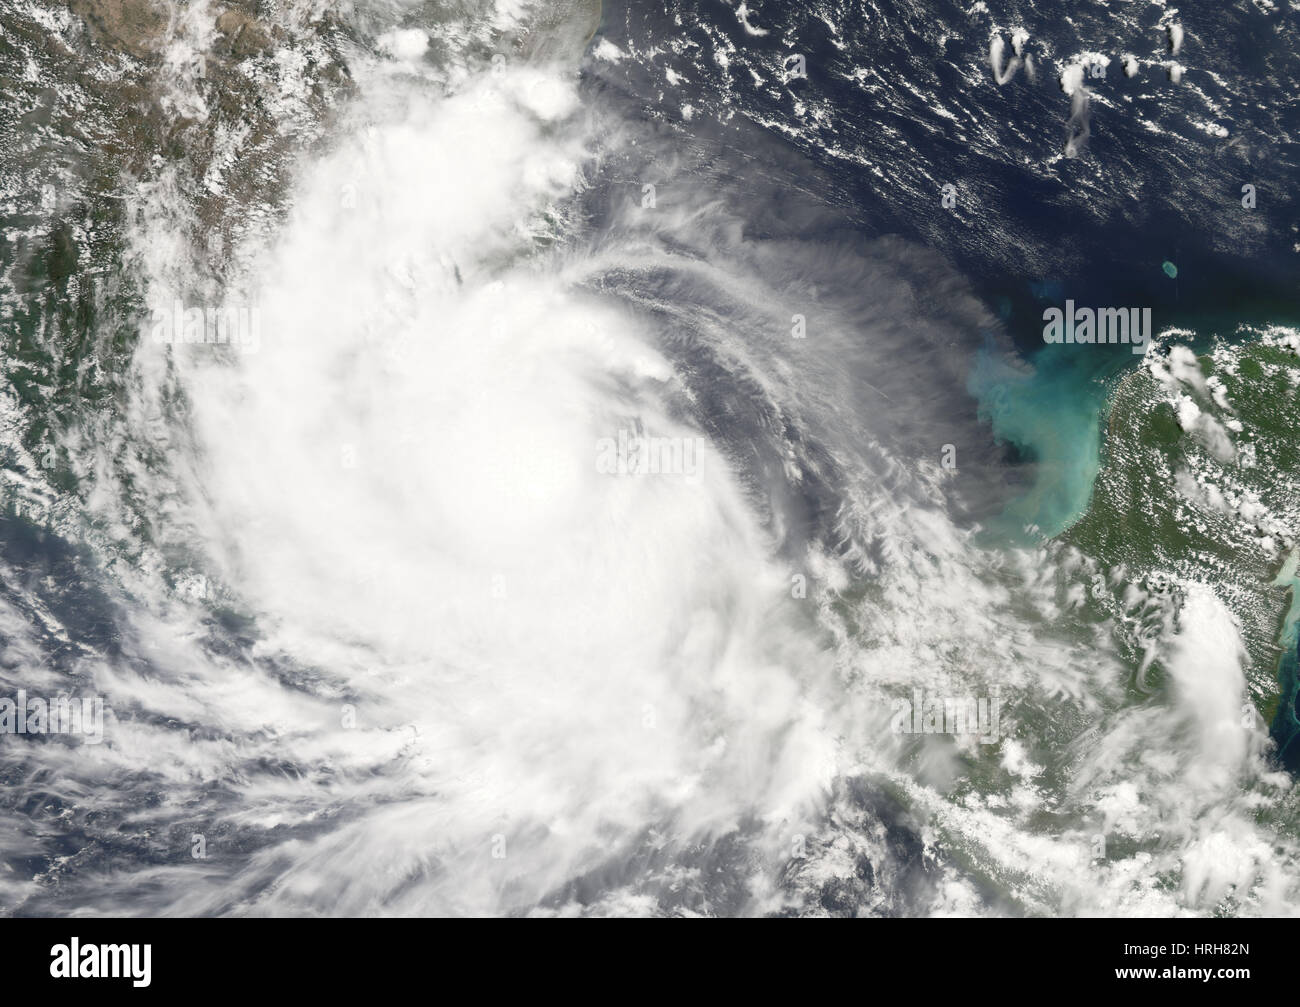 Hurricane Dean, MODIS Image, 2007 Stock Photo